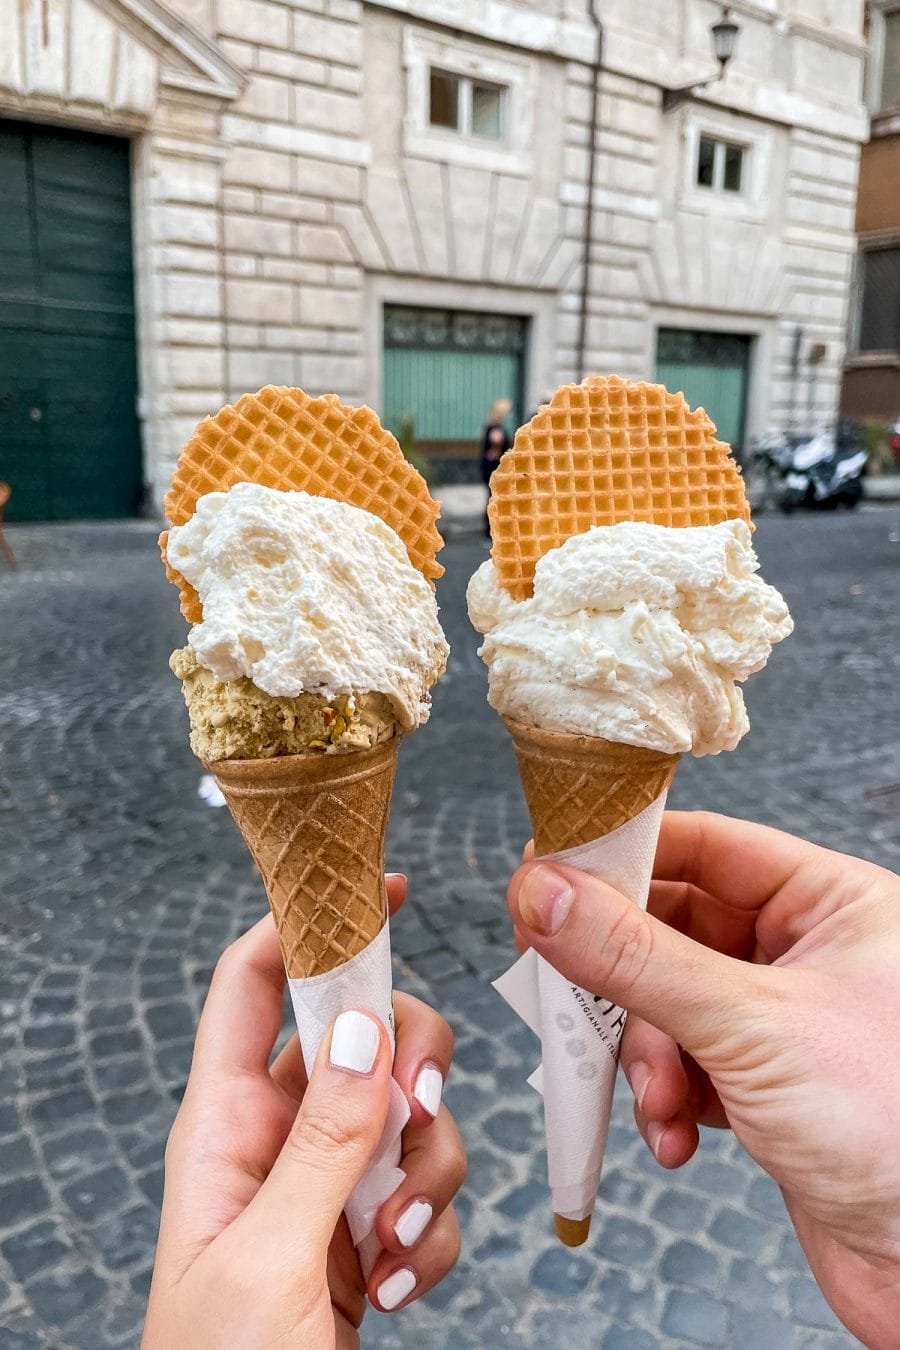 Ice cream in Rome, Italy